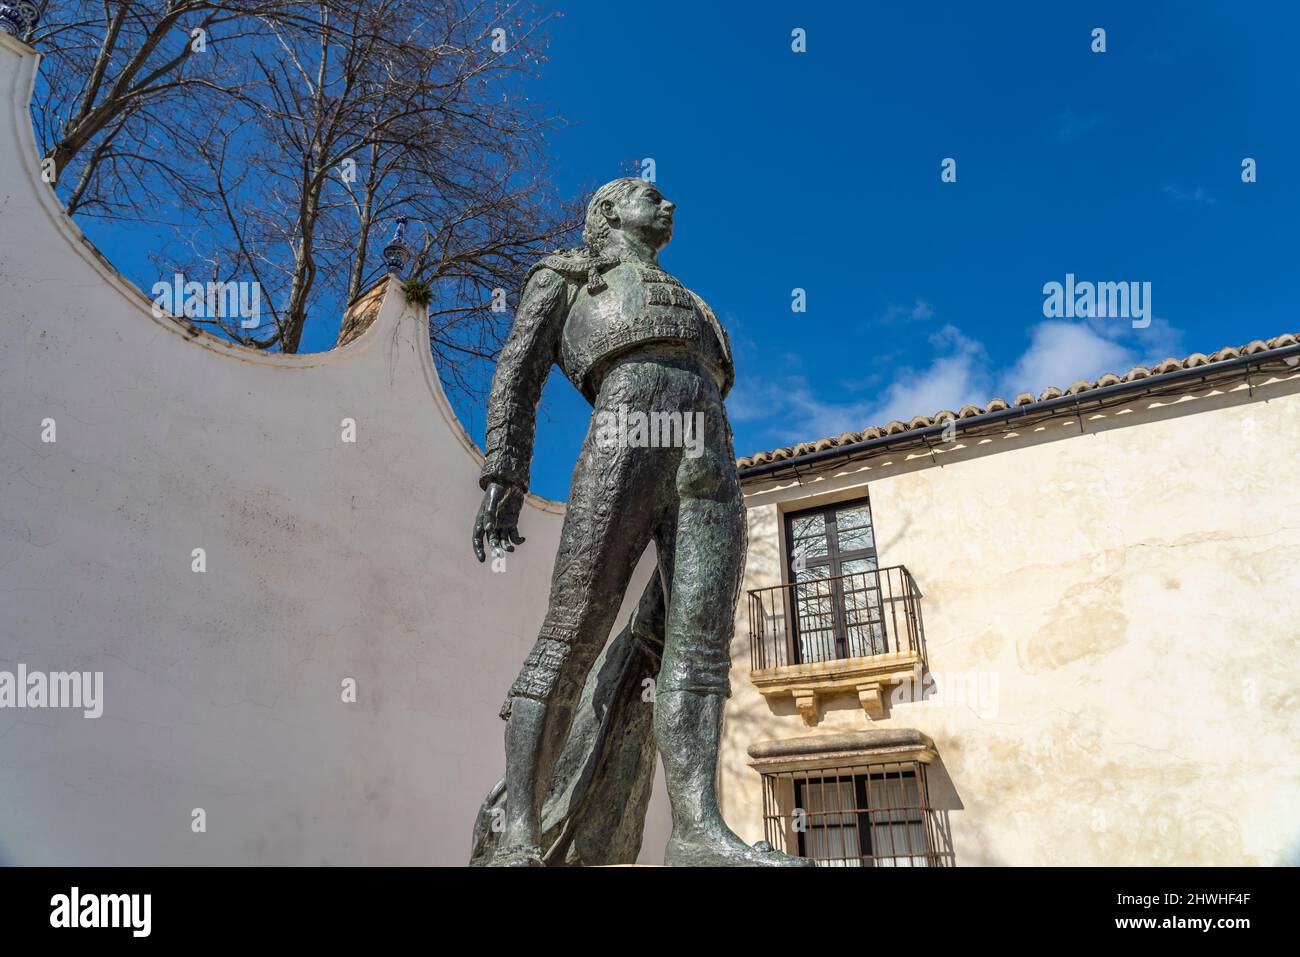 Statue de Torero Antonio Ordonez, Ronda, Andalusien, Espagnol | Statue de Matador Antonio Ordonez, Ronda, Andalousie, Espagne Banque D'Images